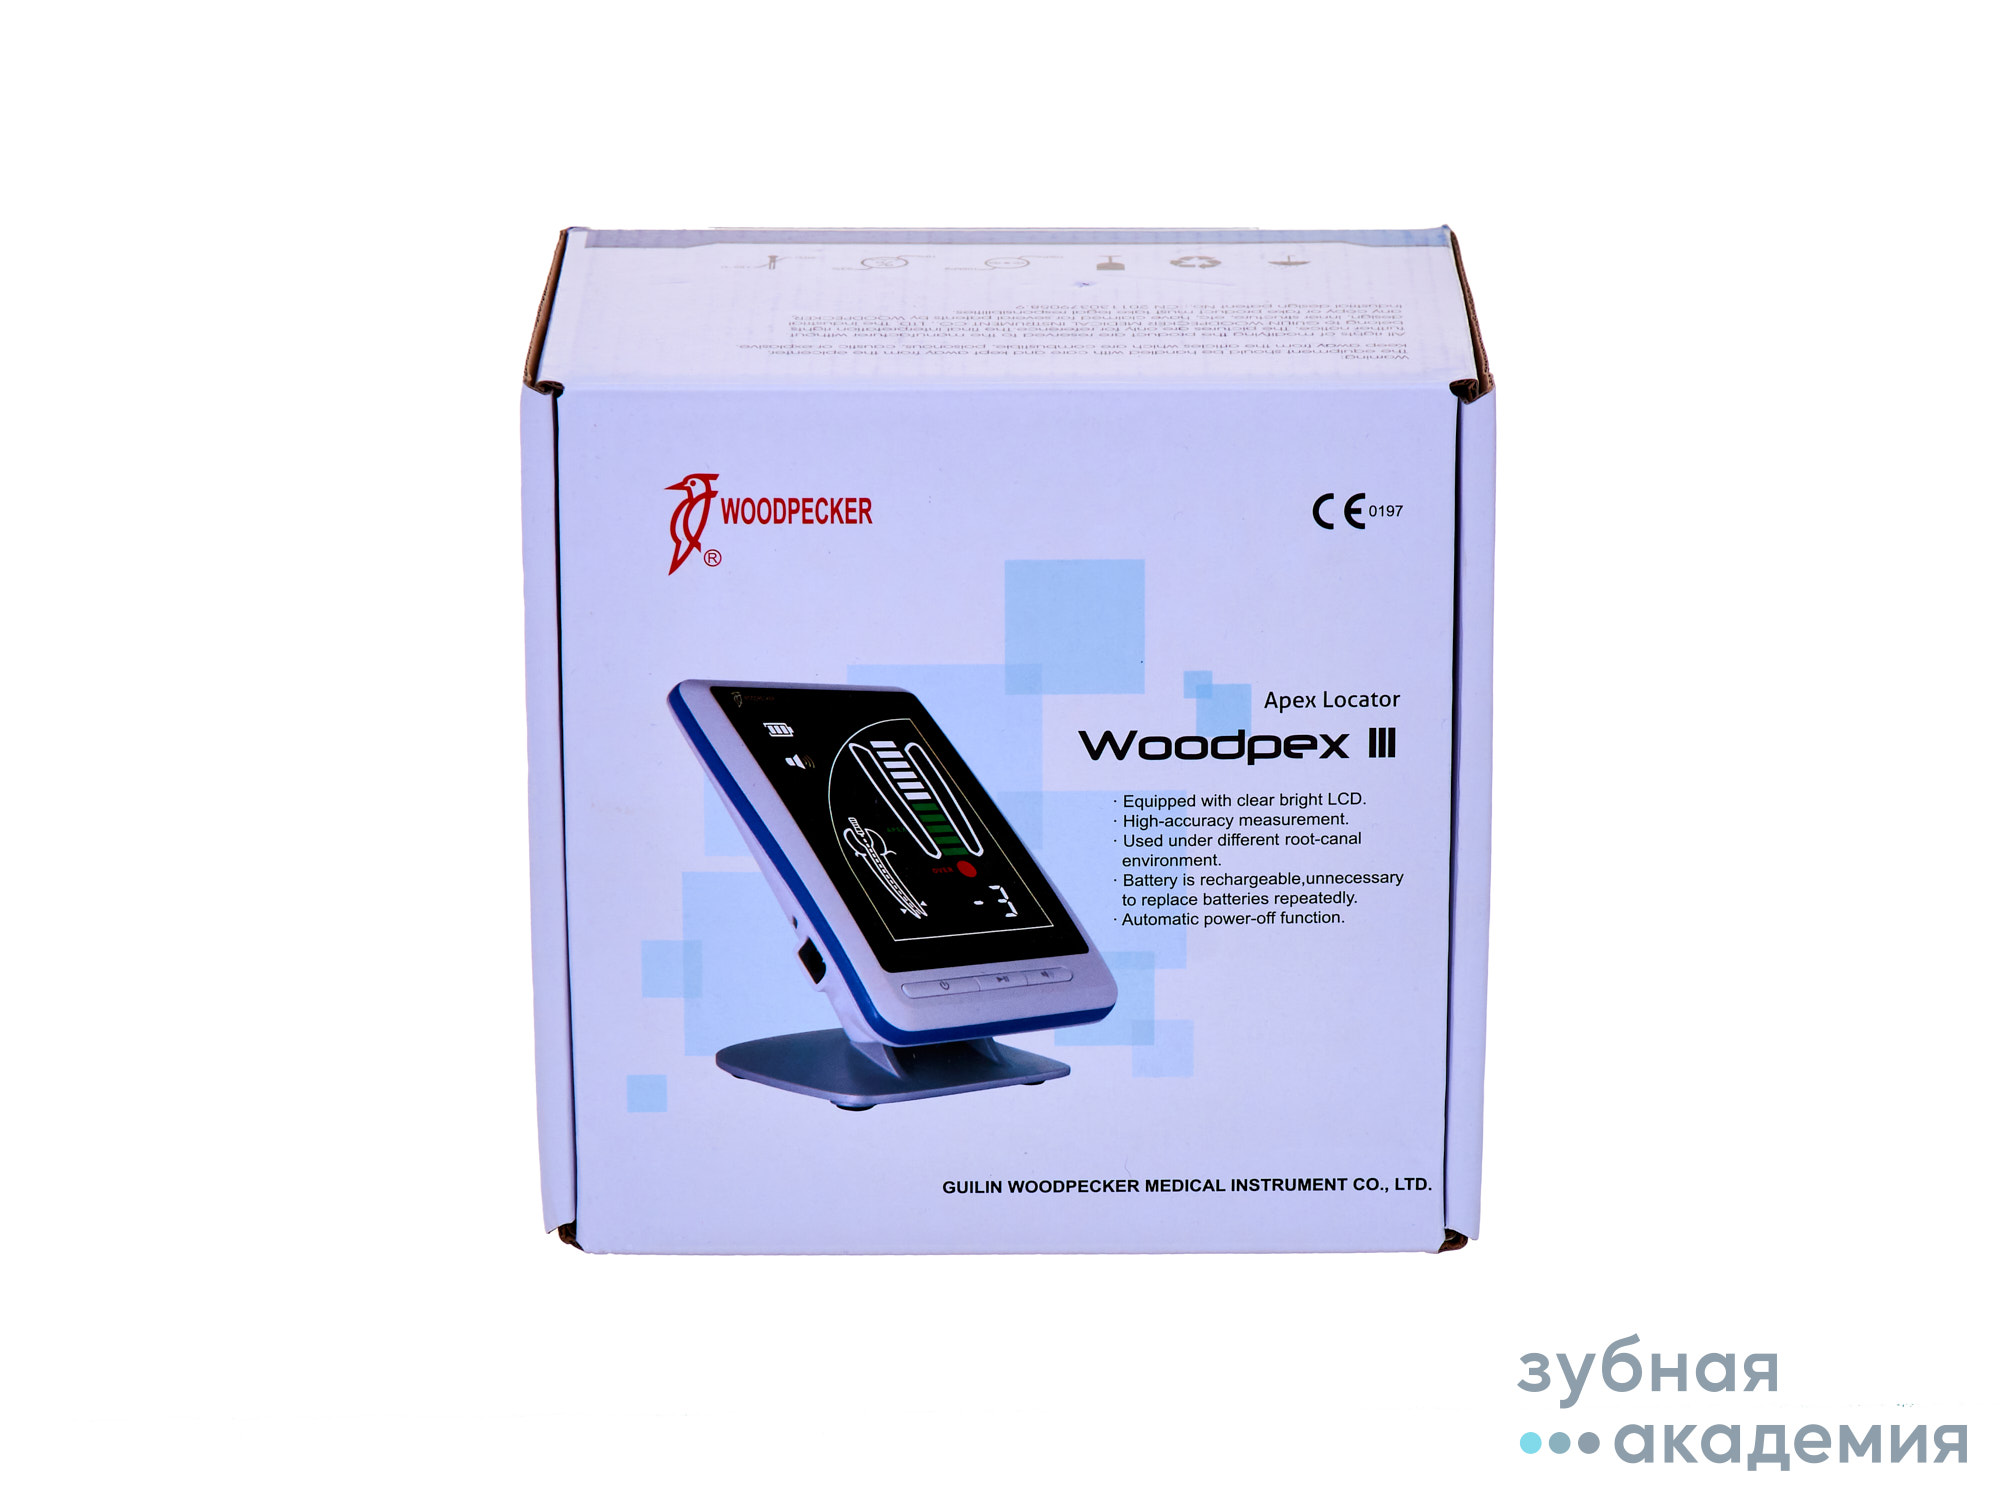 Апекслокатор Woodpex III  /WOODPECKER/ Китай